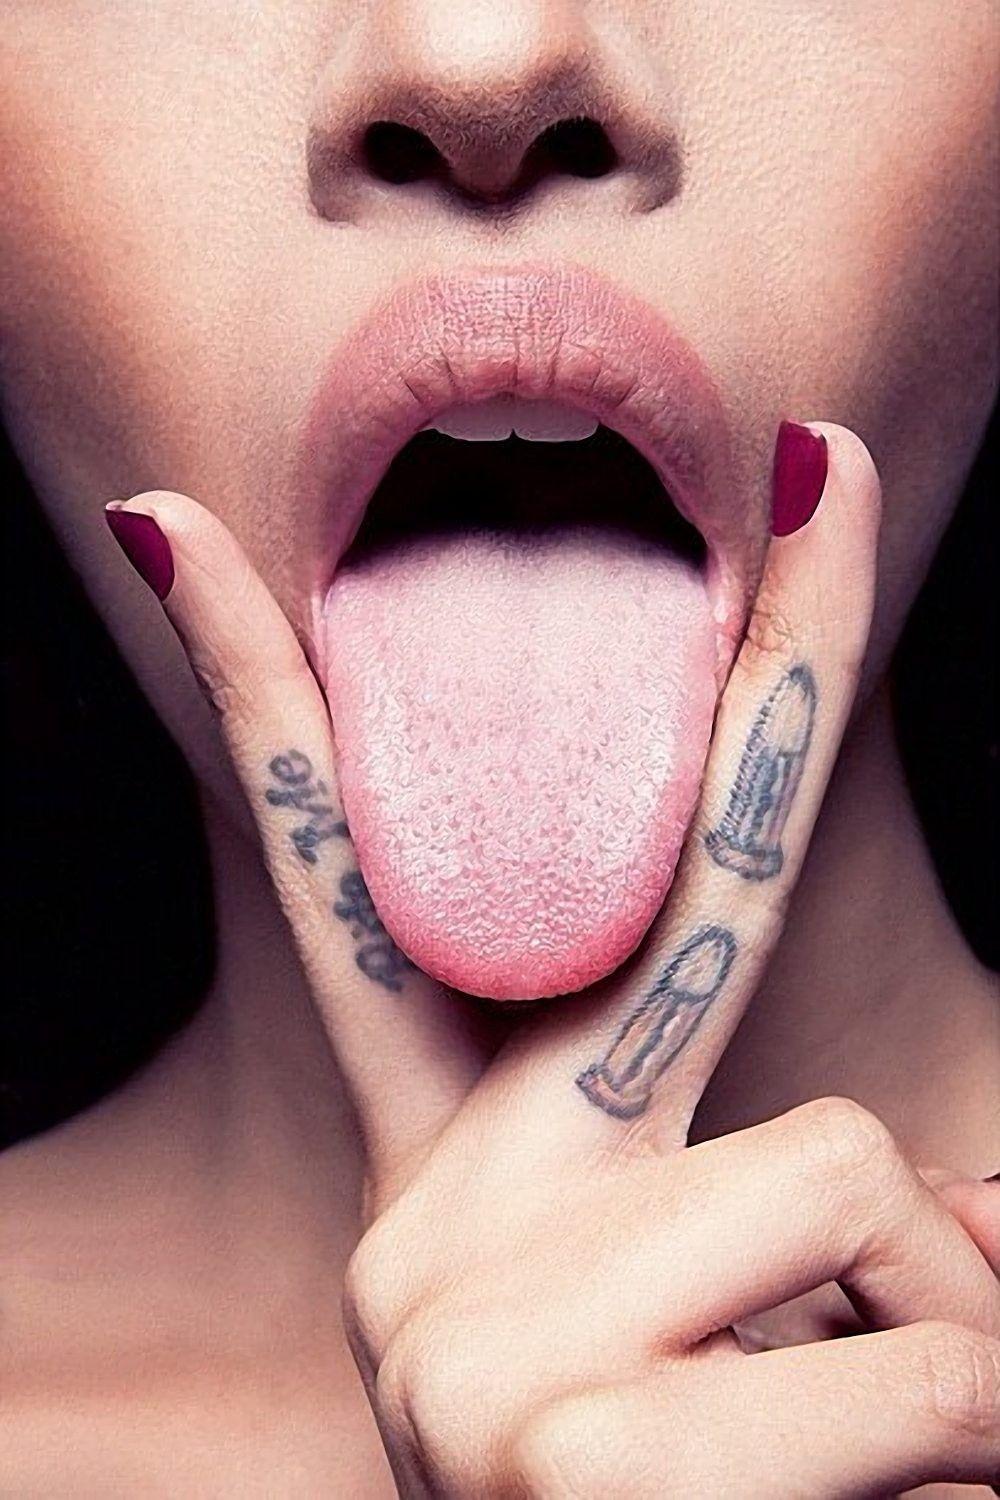  Rolling Stones tongue wallpaper   Wallery